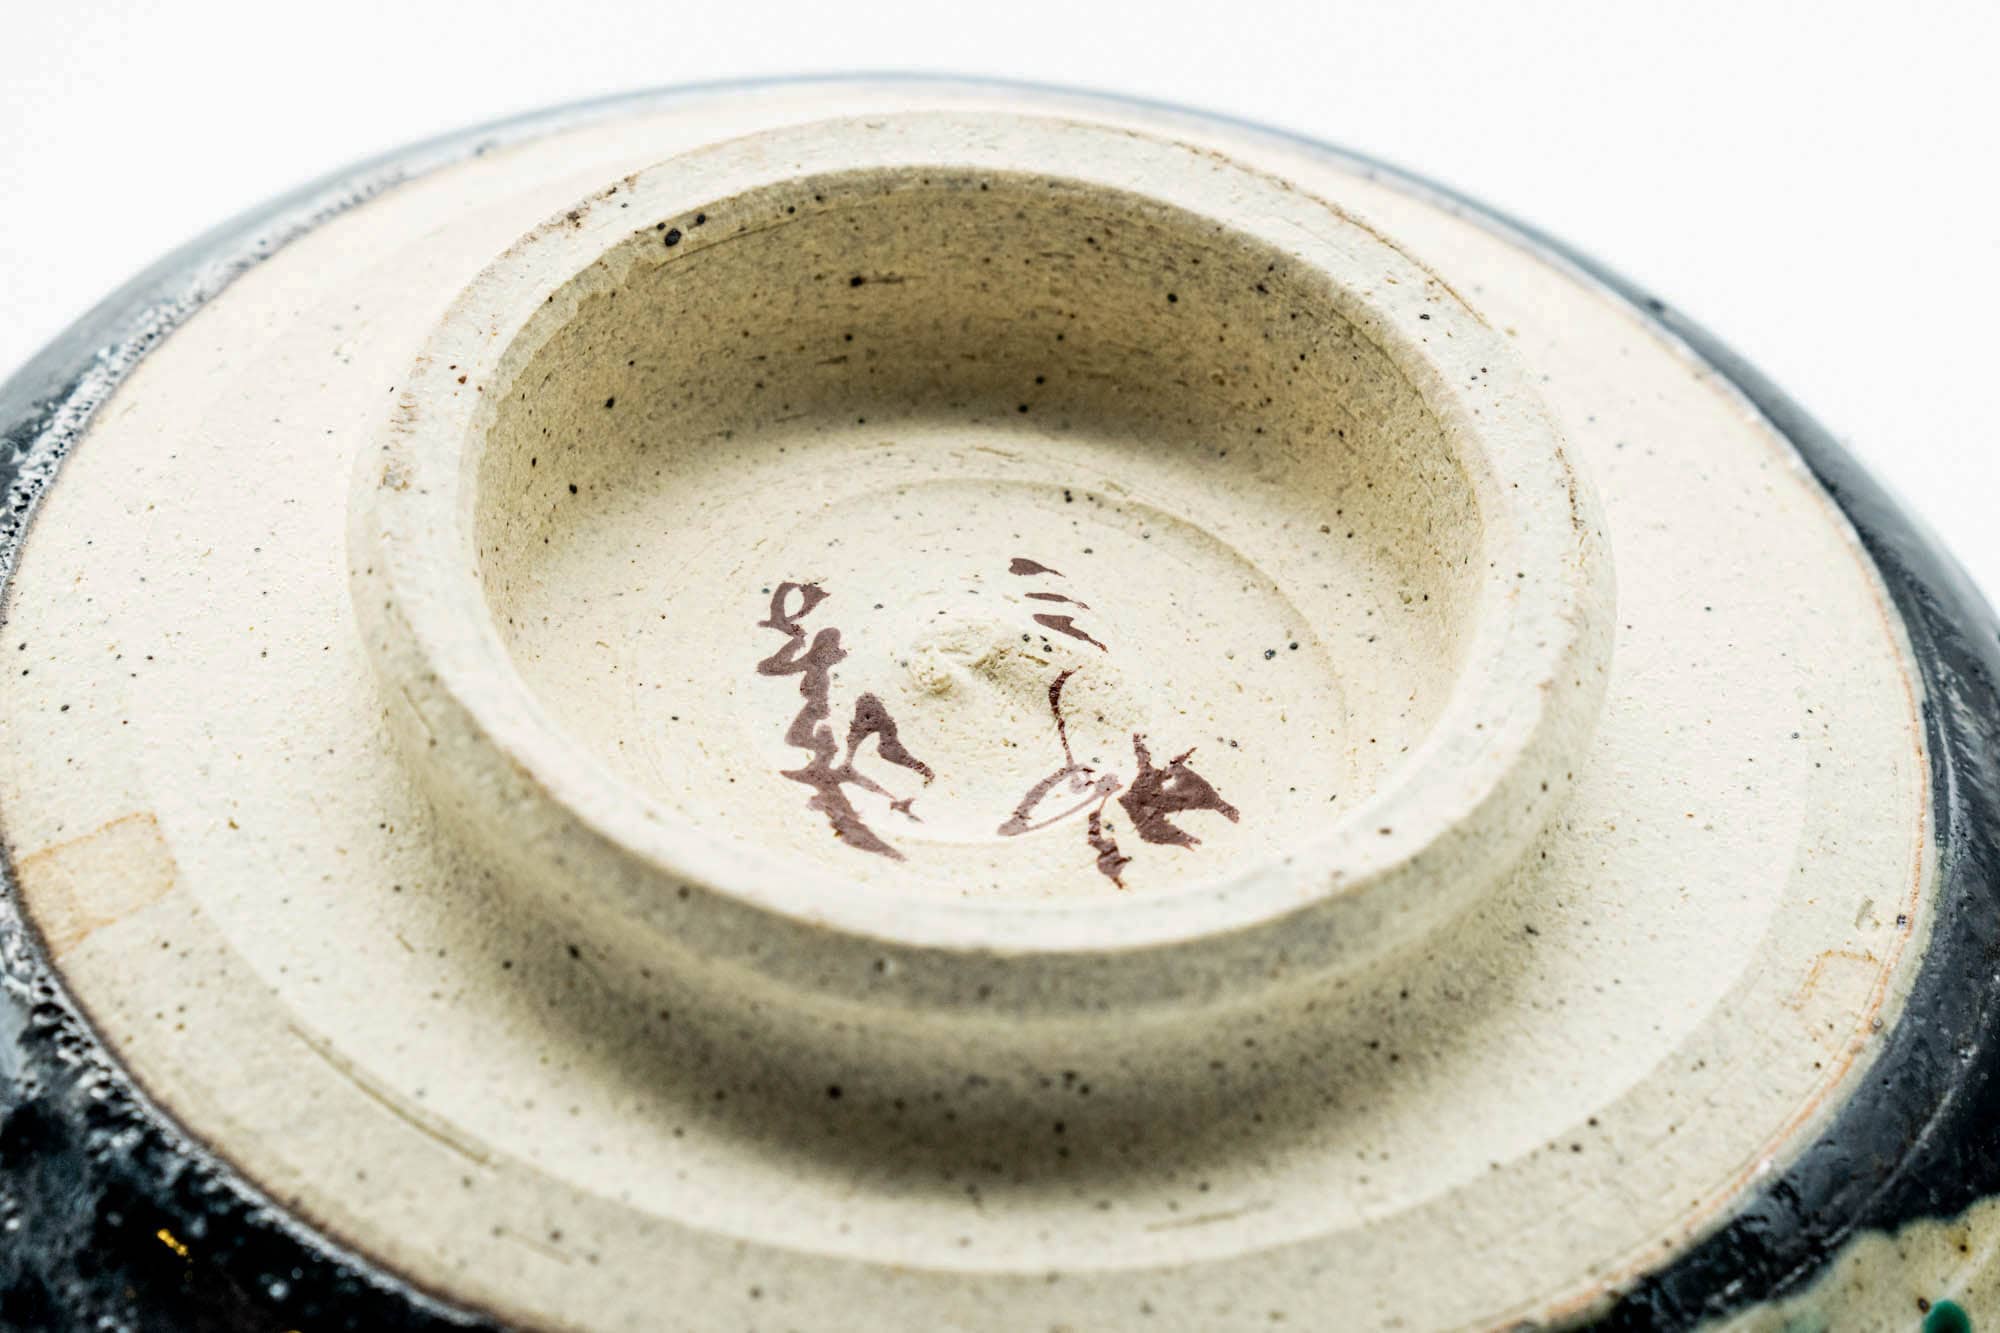 Japanese Matcha Bowl - Small Floral Black Metallic Glazed Chawan - 200ml